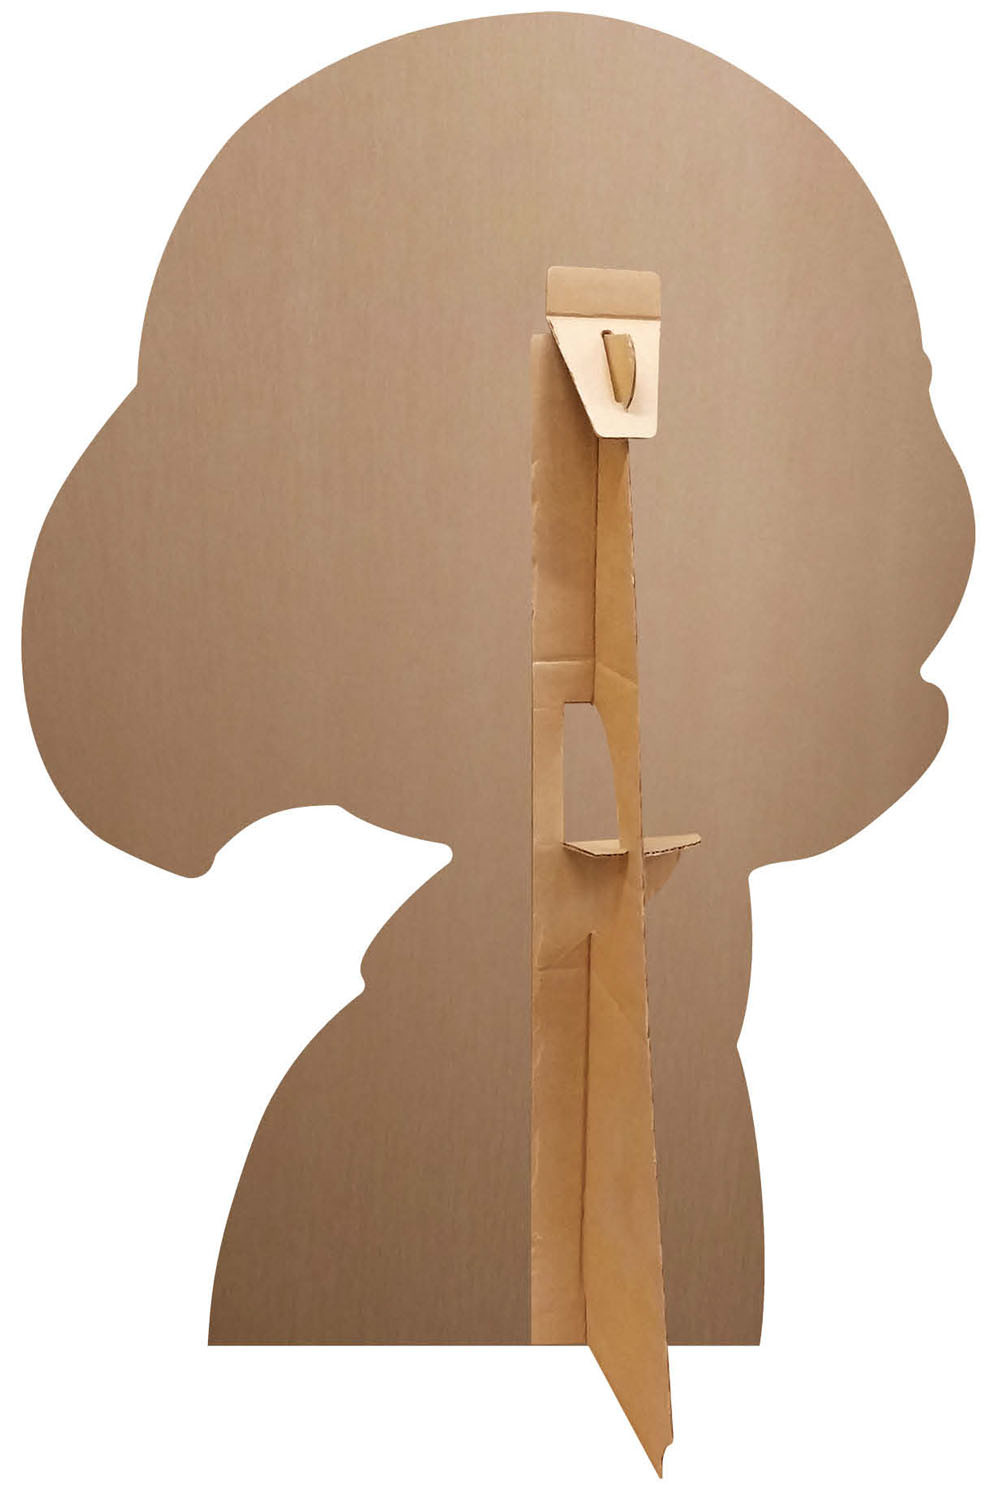 Tikki the Kwami from Miraculous Cardboard Cutout / Standee / Standup